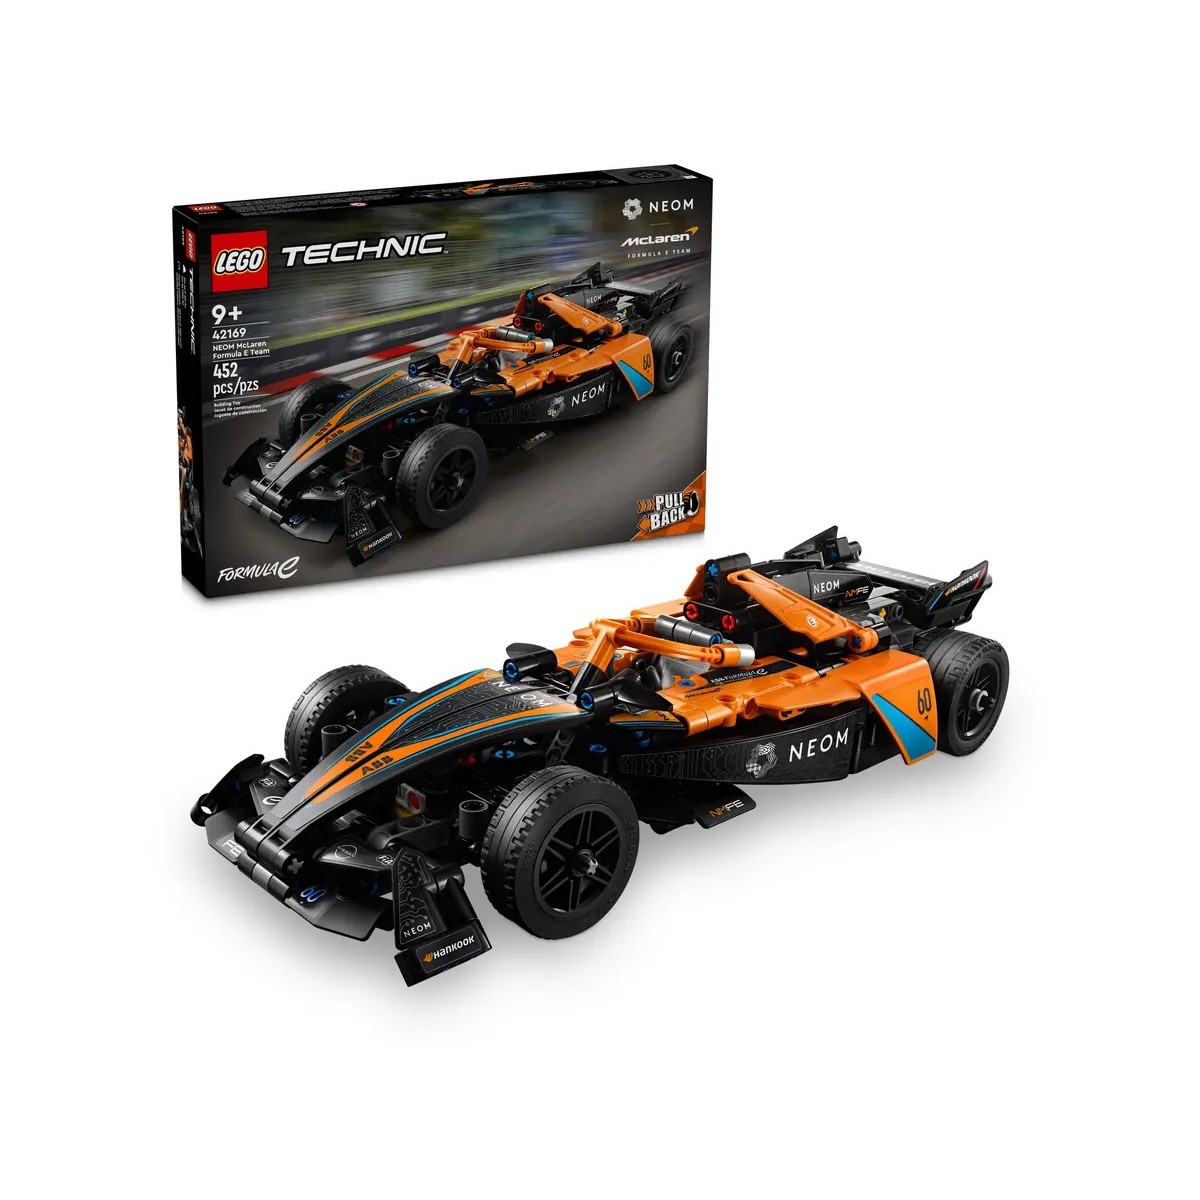 LEGO TECHNIC NEOM MCLAREN FORMULA E RACE CAR /42169/ posledný kus